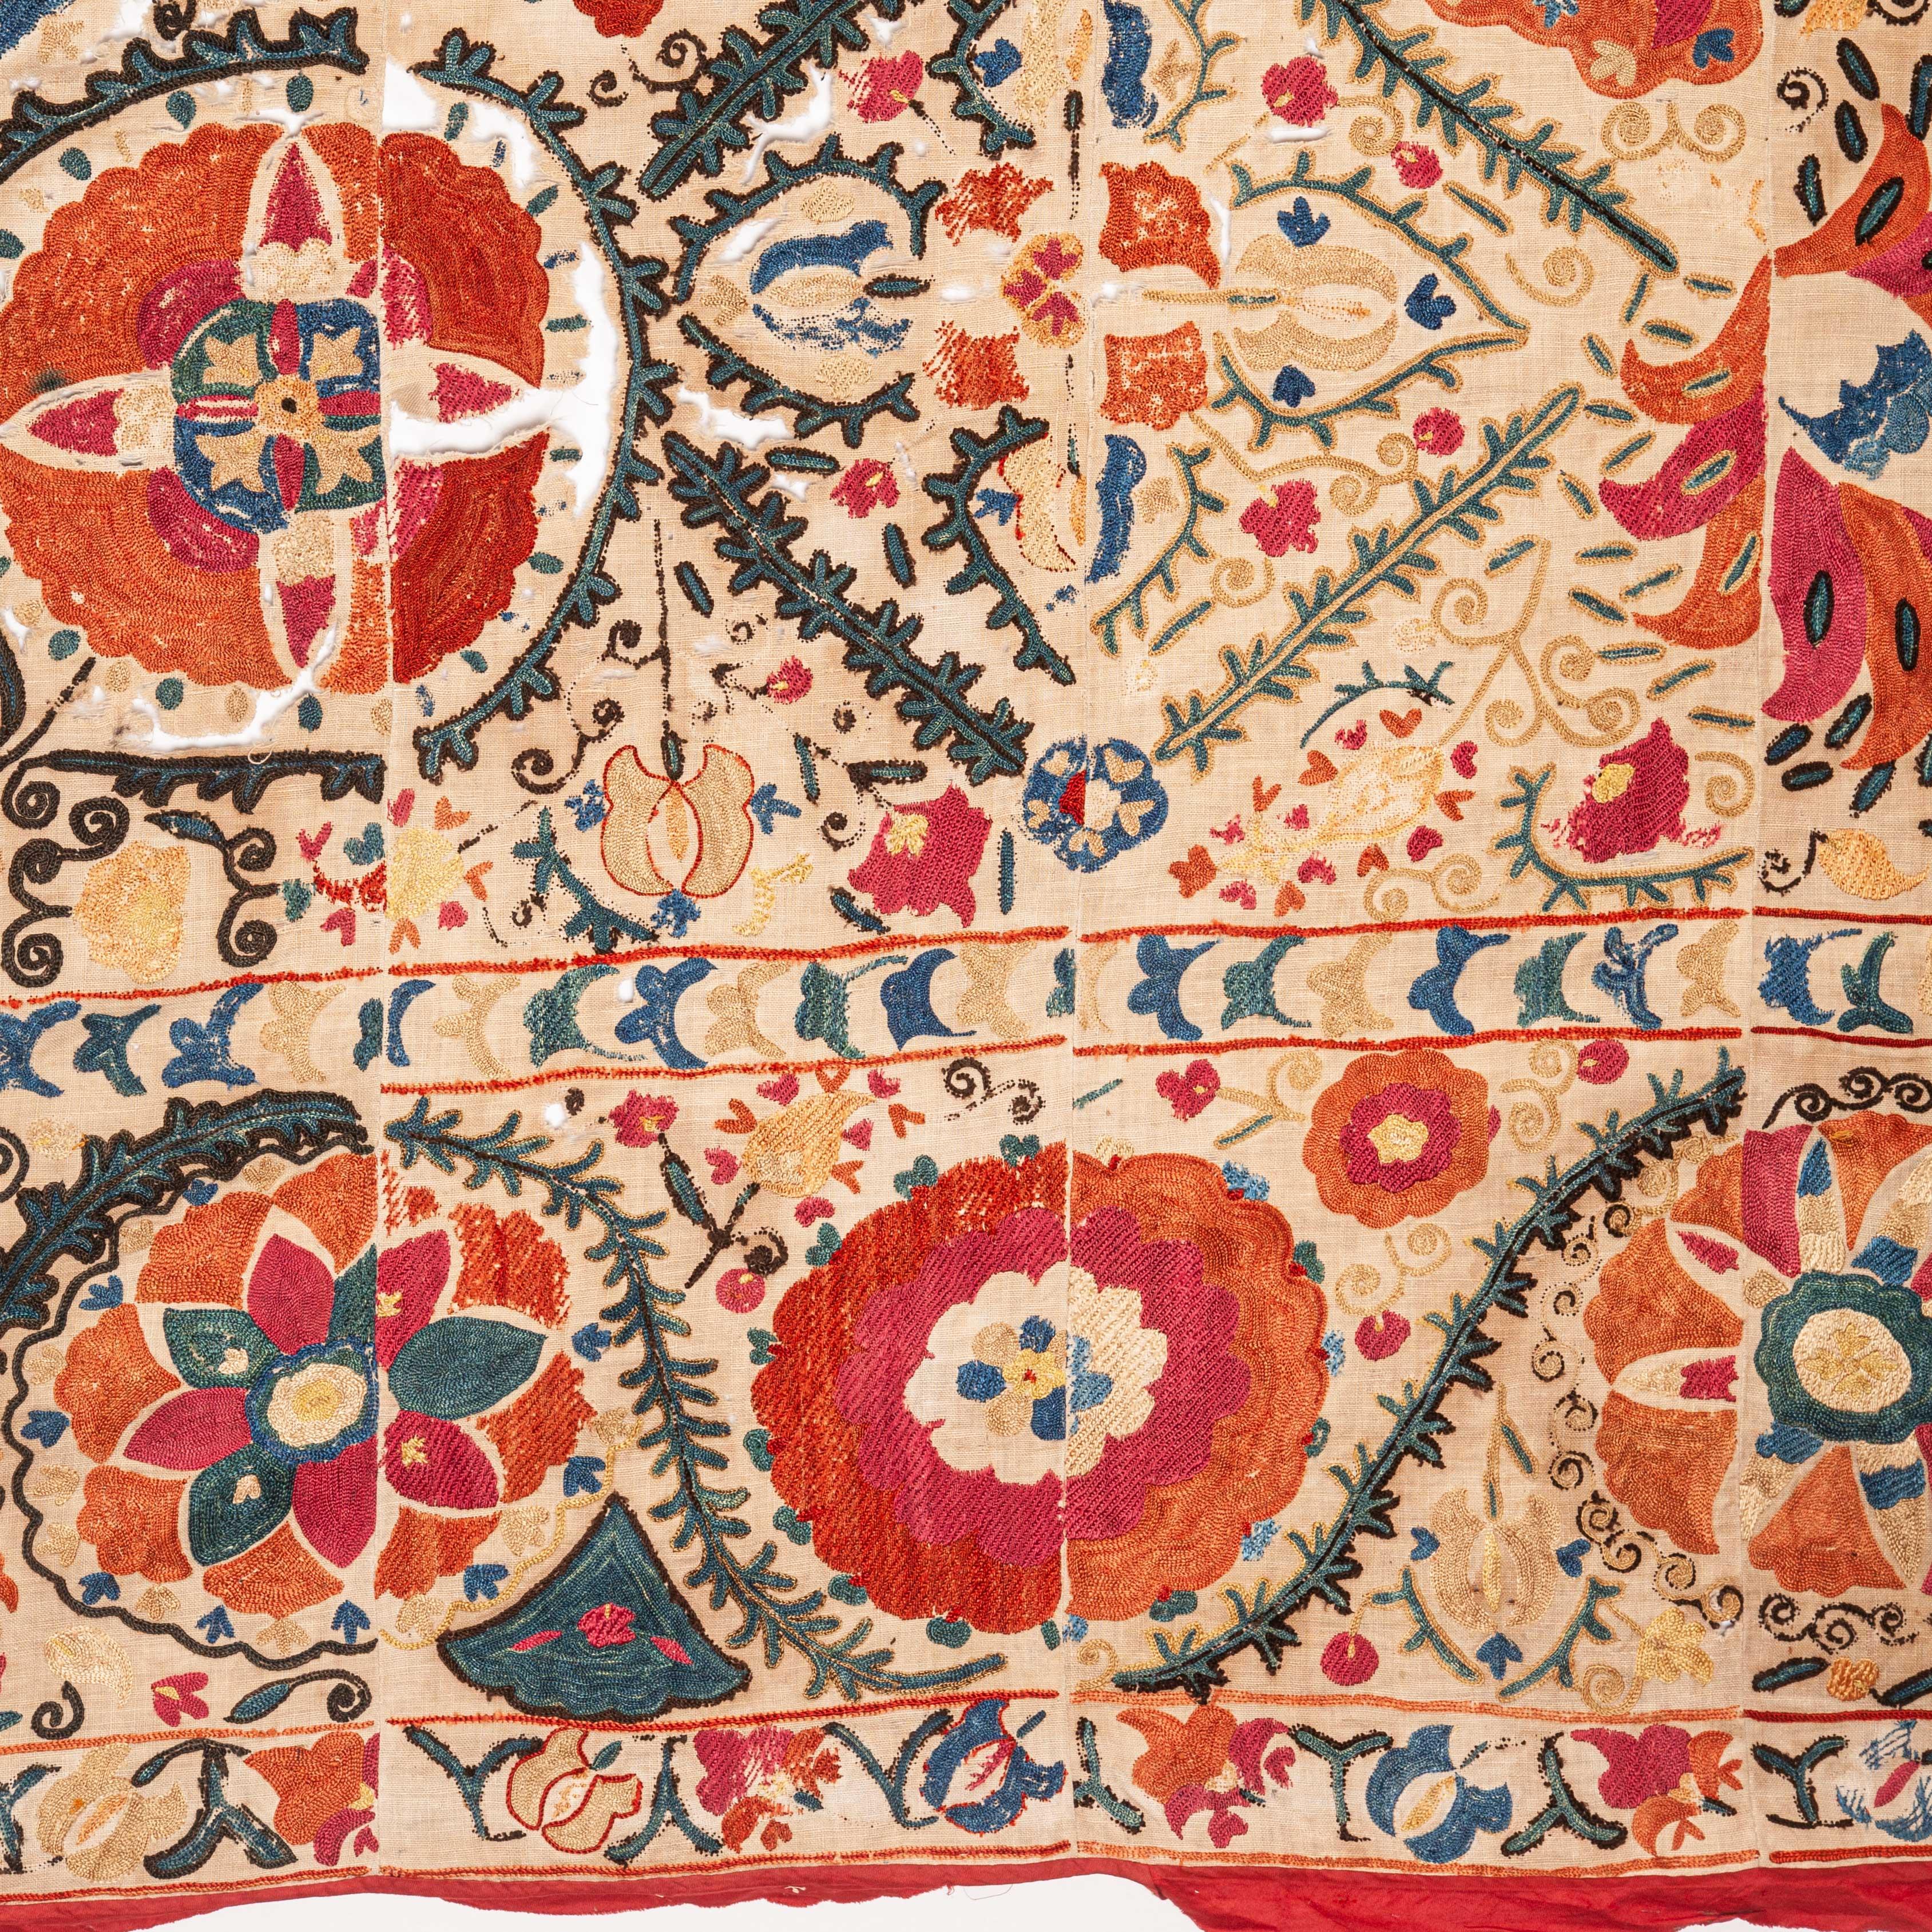 Embroidered Antique Suzani from Bukhara, Uzbekistan, Mid-19th Century